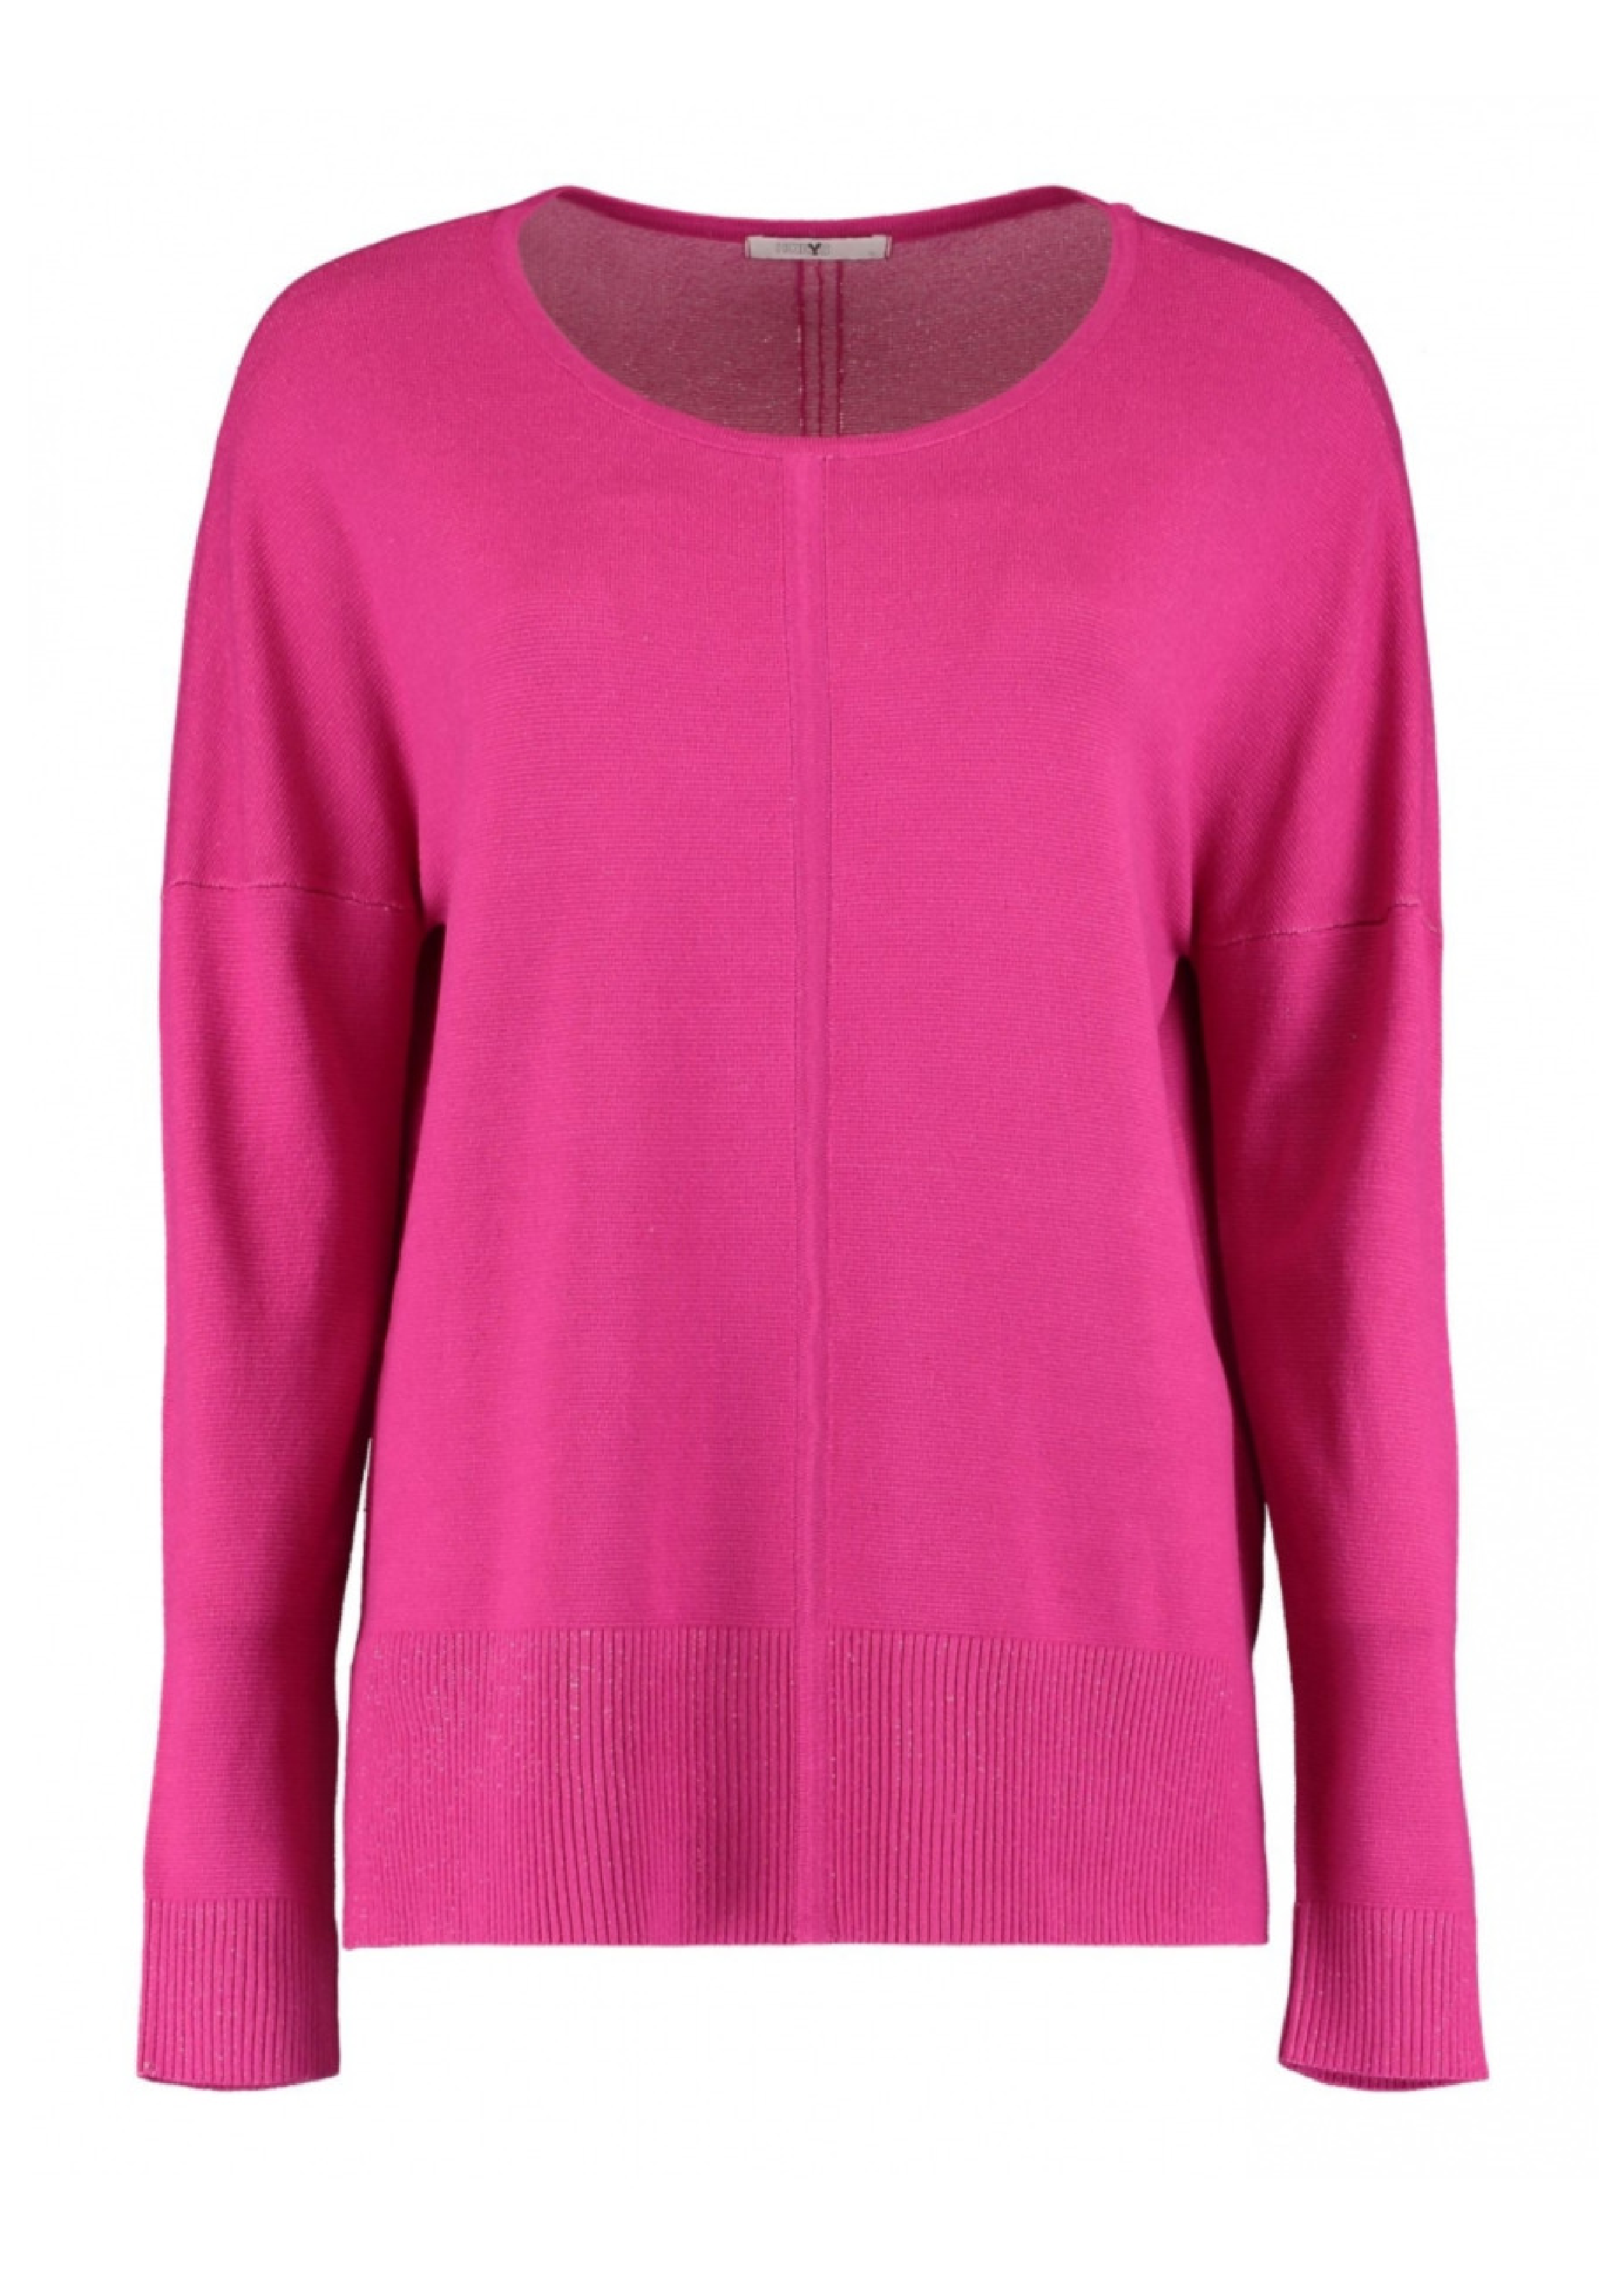 Yamila Pink Berry Fine Knit Top